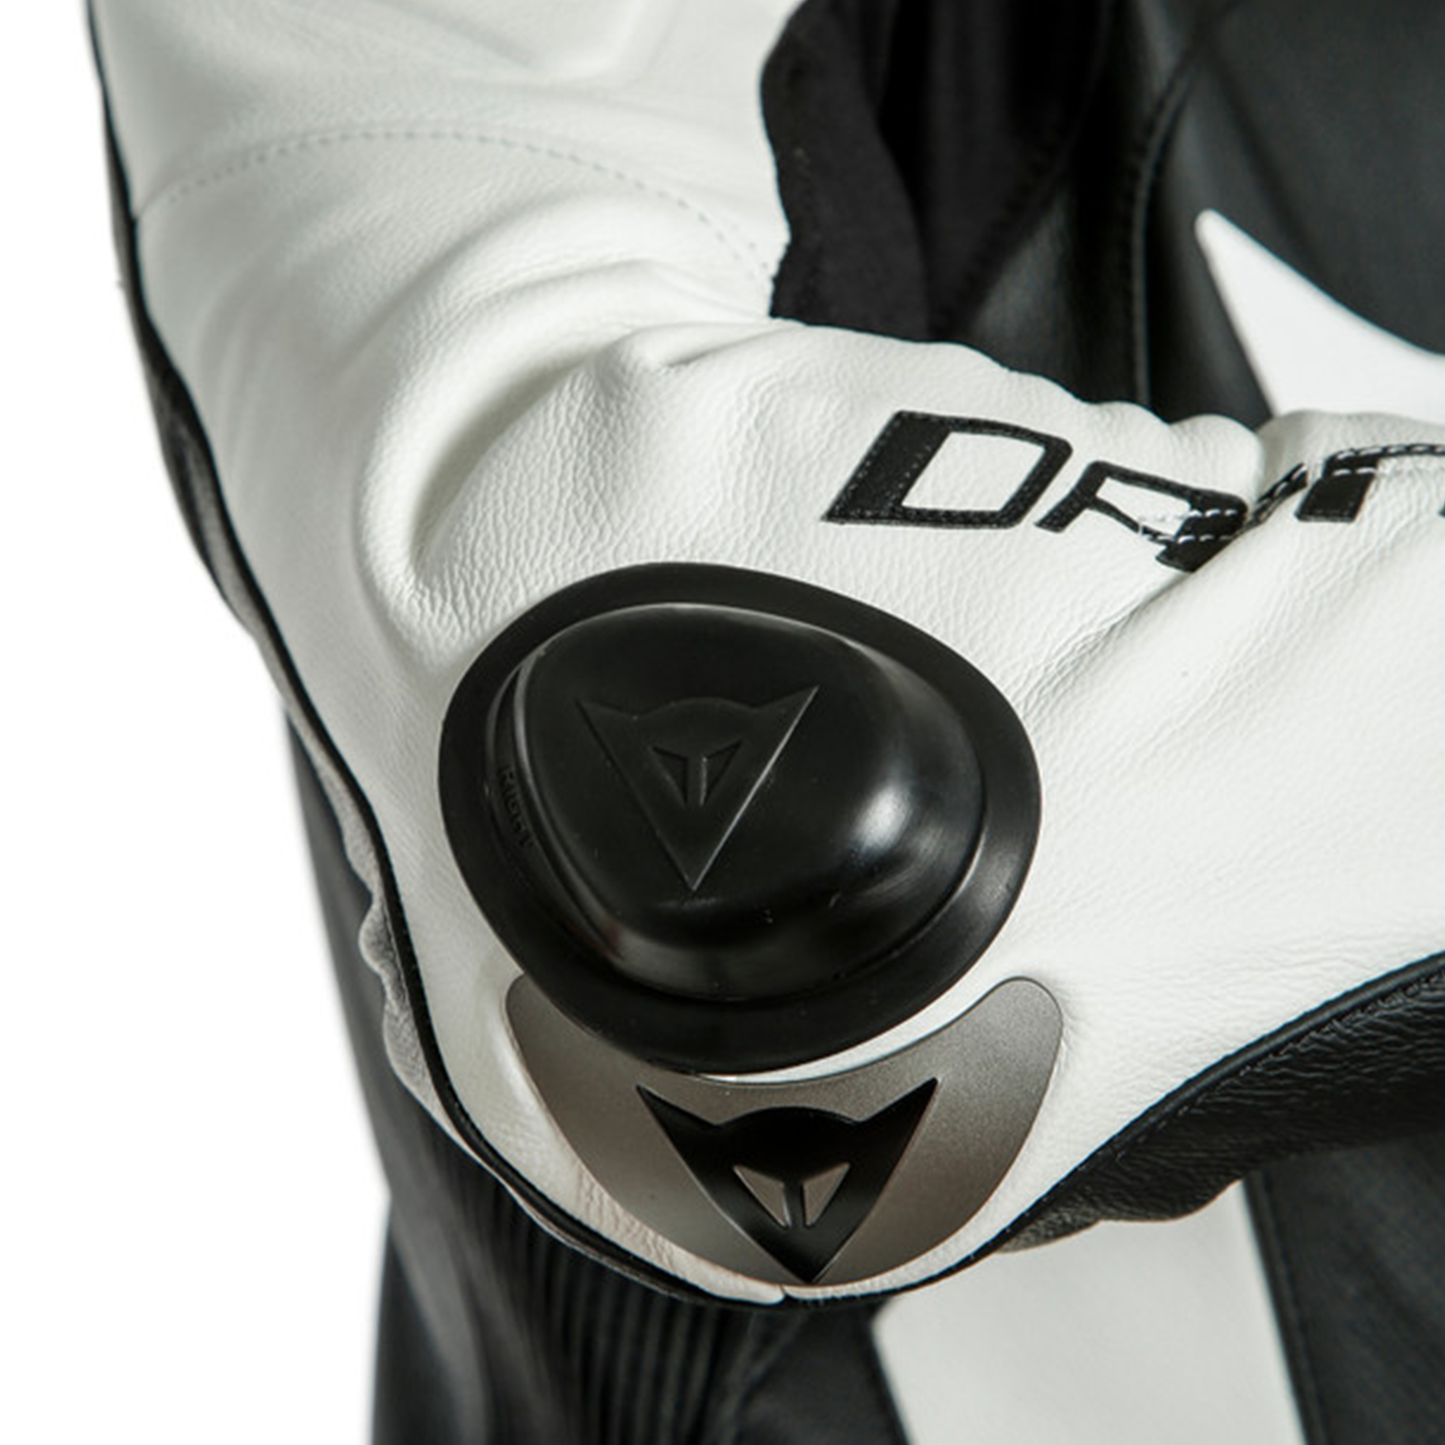 Dainese Laguna Seca 5 1 Piece Perf Leather Suit - Black/White